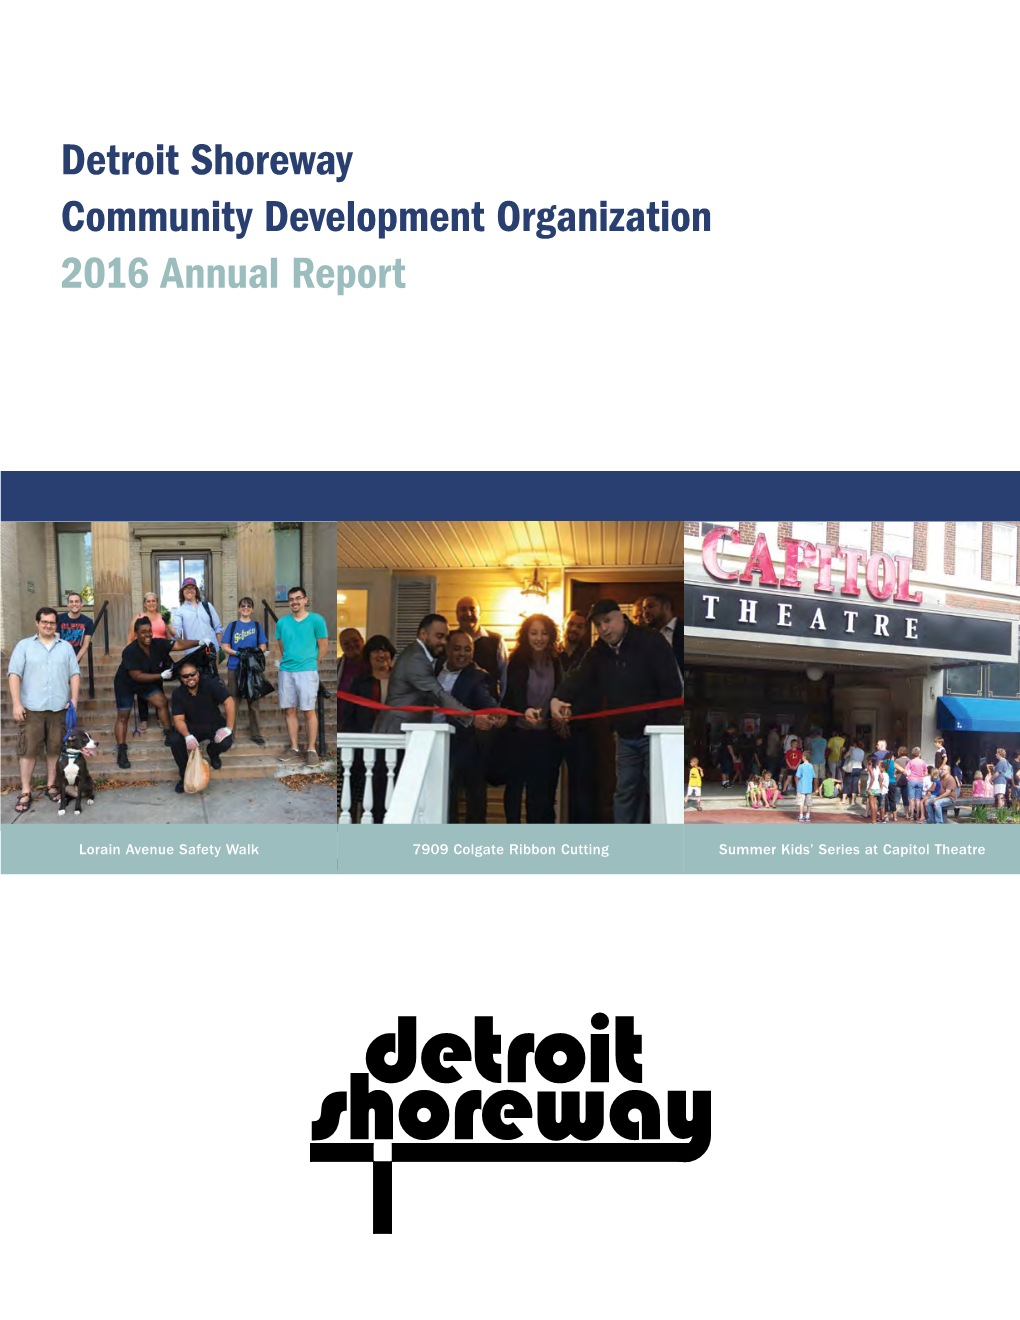 Detroit Shoreway Community Development Organization 2016 Annual Report